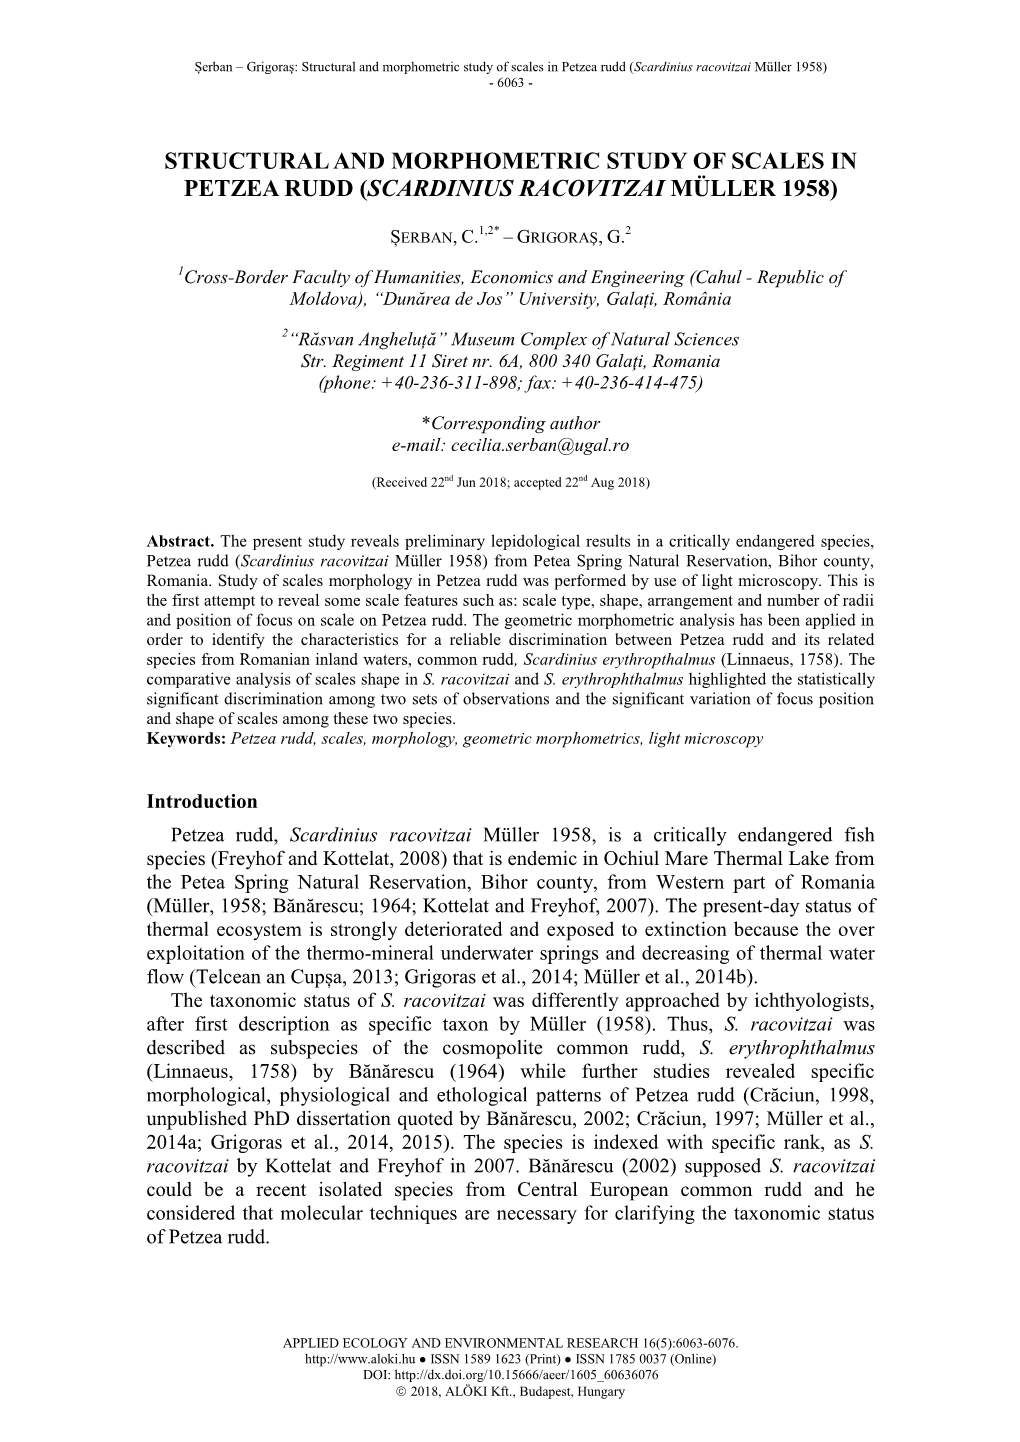 Structural and Morphometric Study of Scales in Petzea Rudd (Scardinius Racovitzai Müller 1958) - 6063